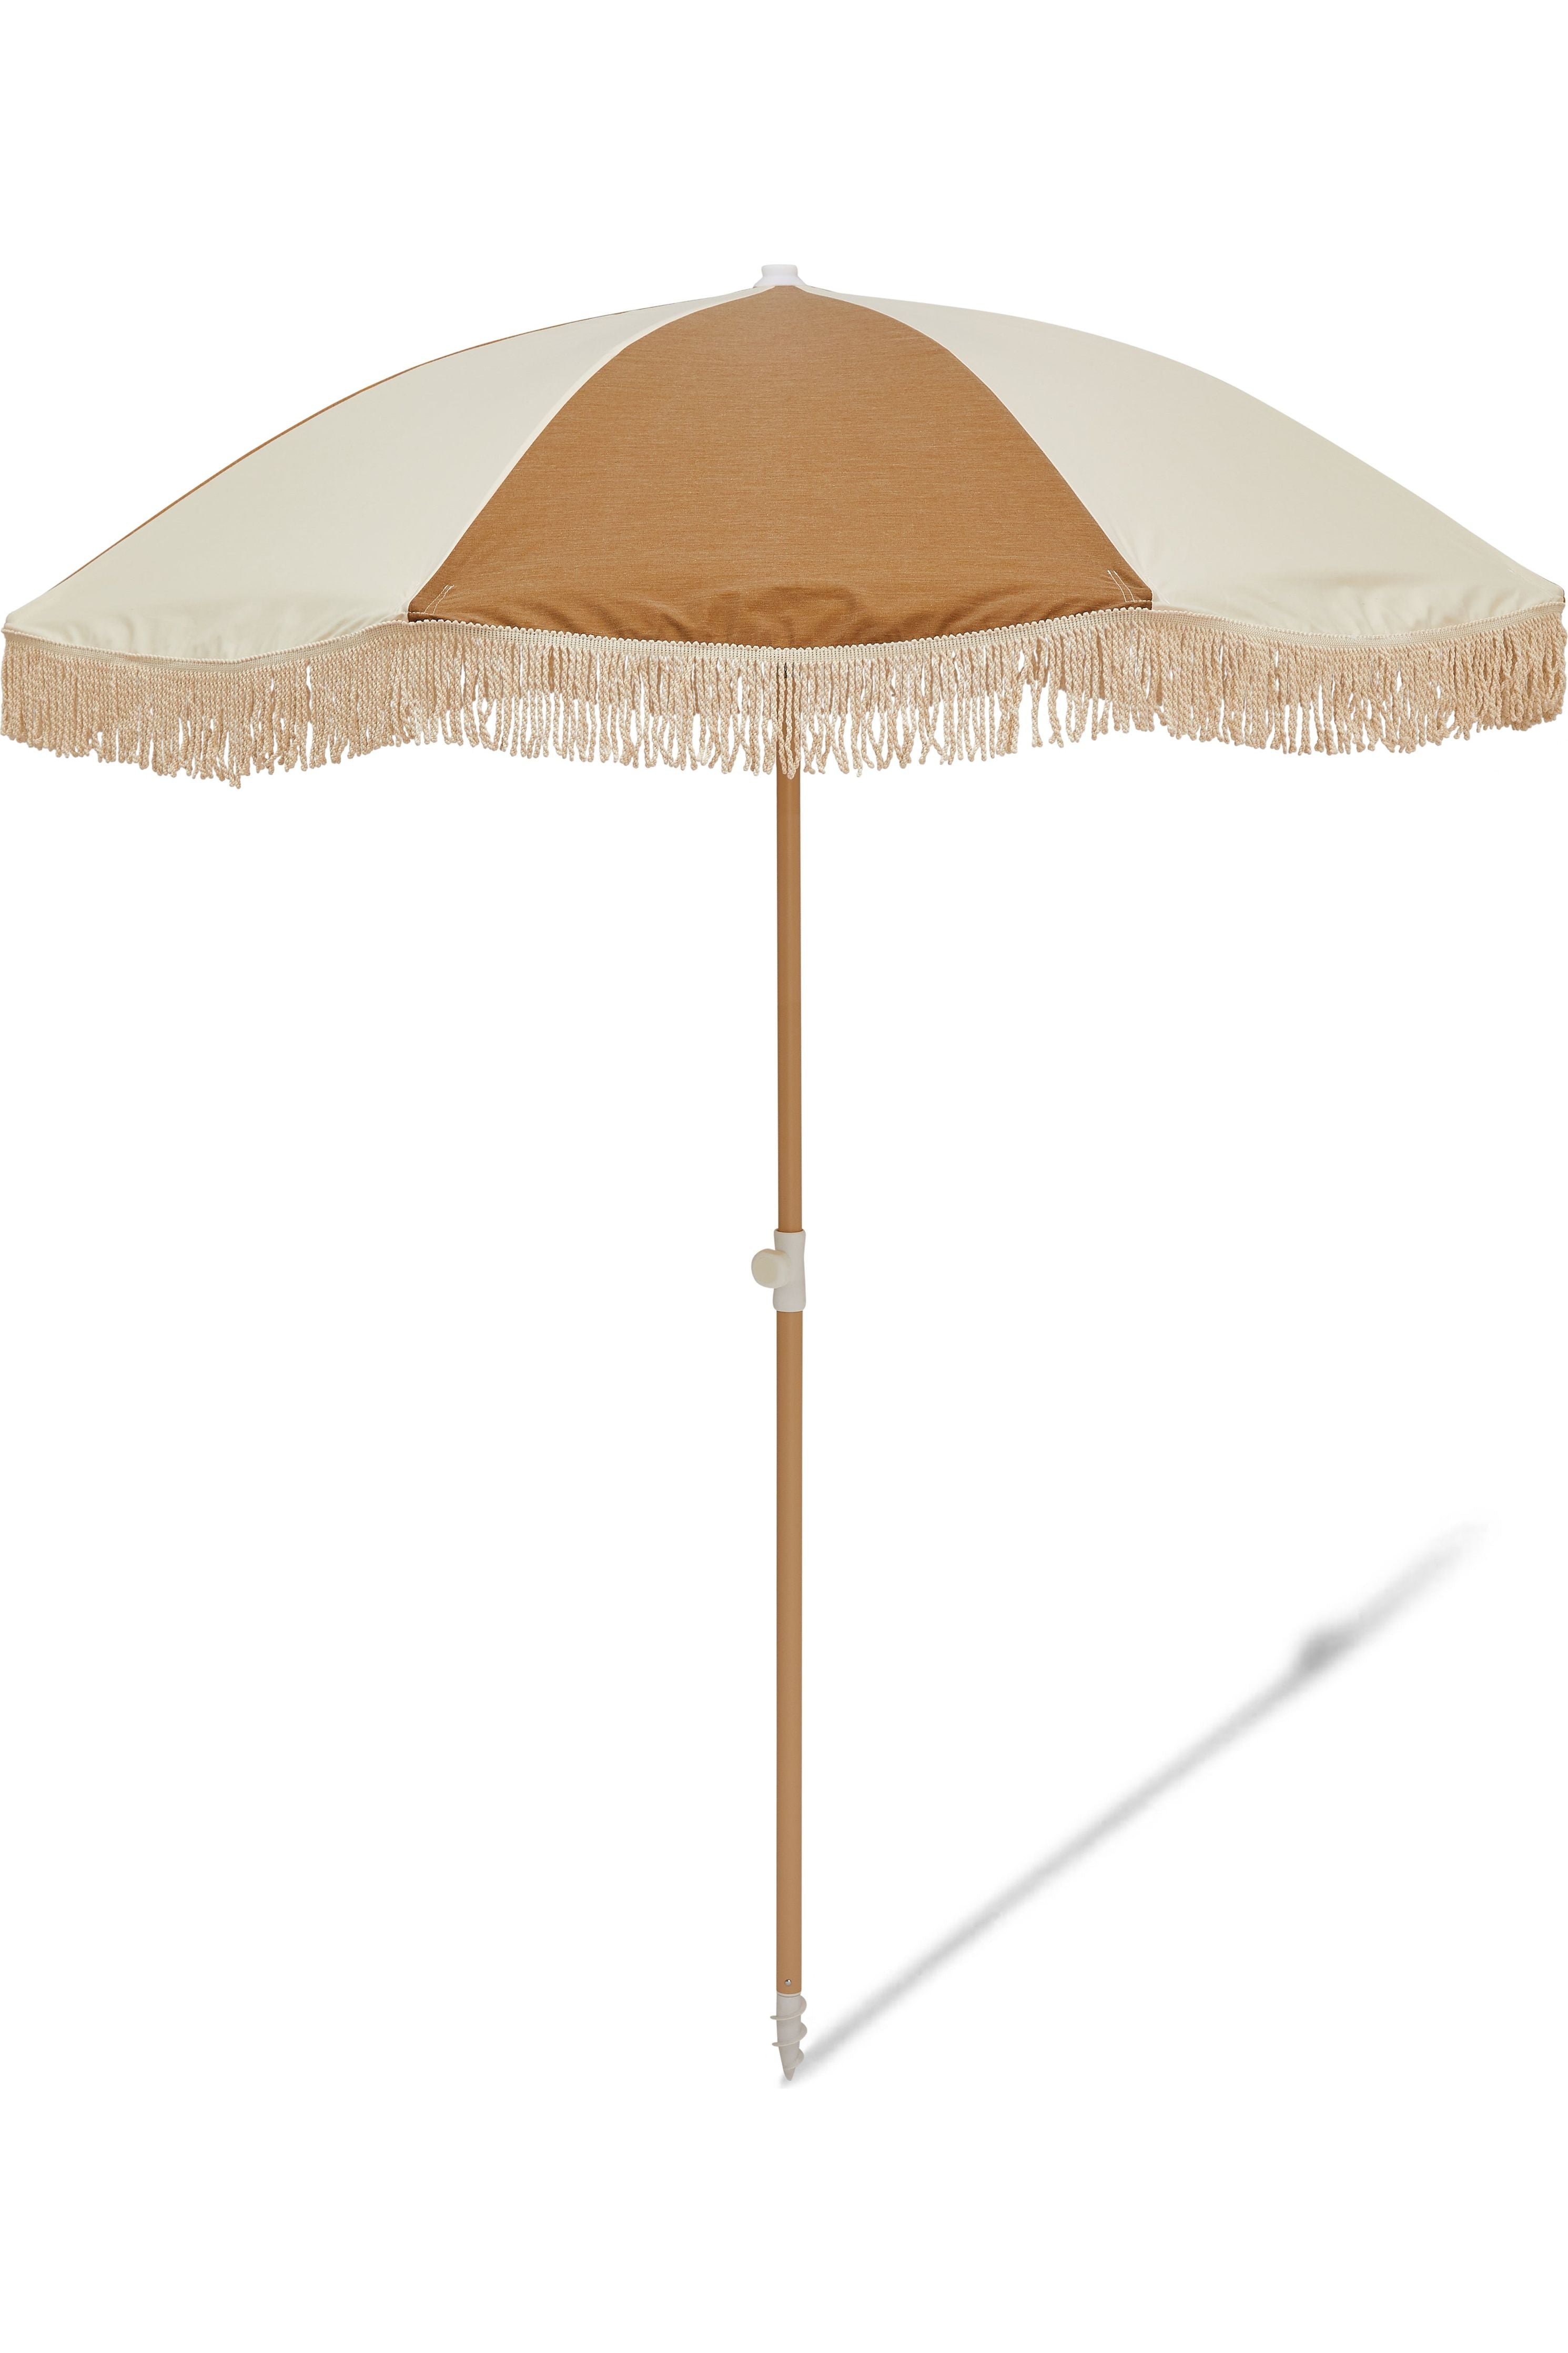 Salty Shadows - Goldie Beach Umbrella